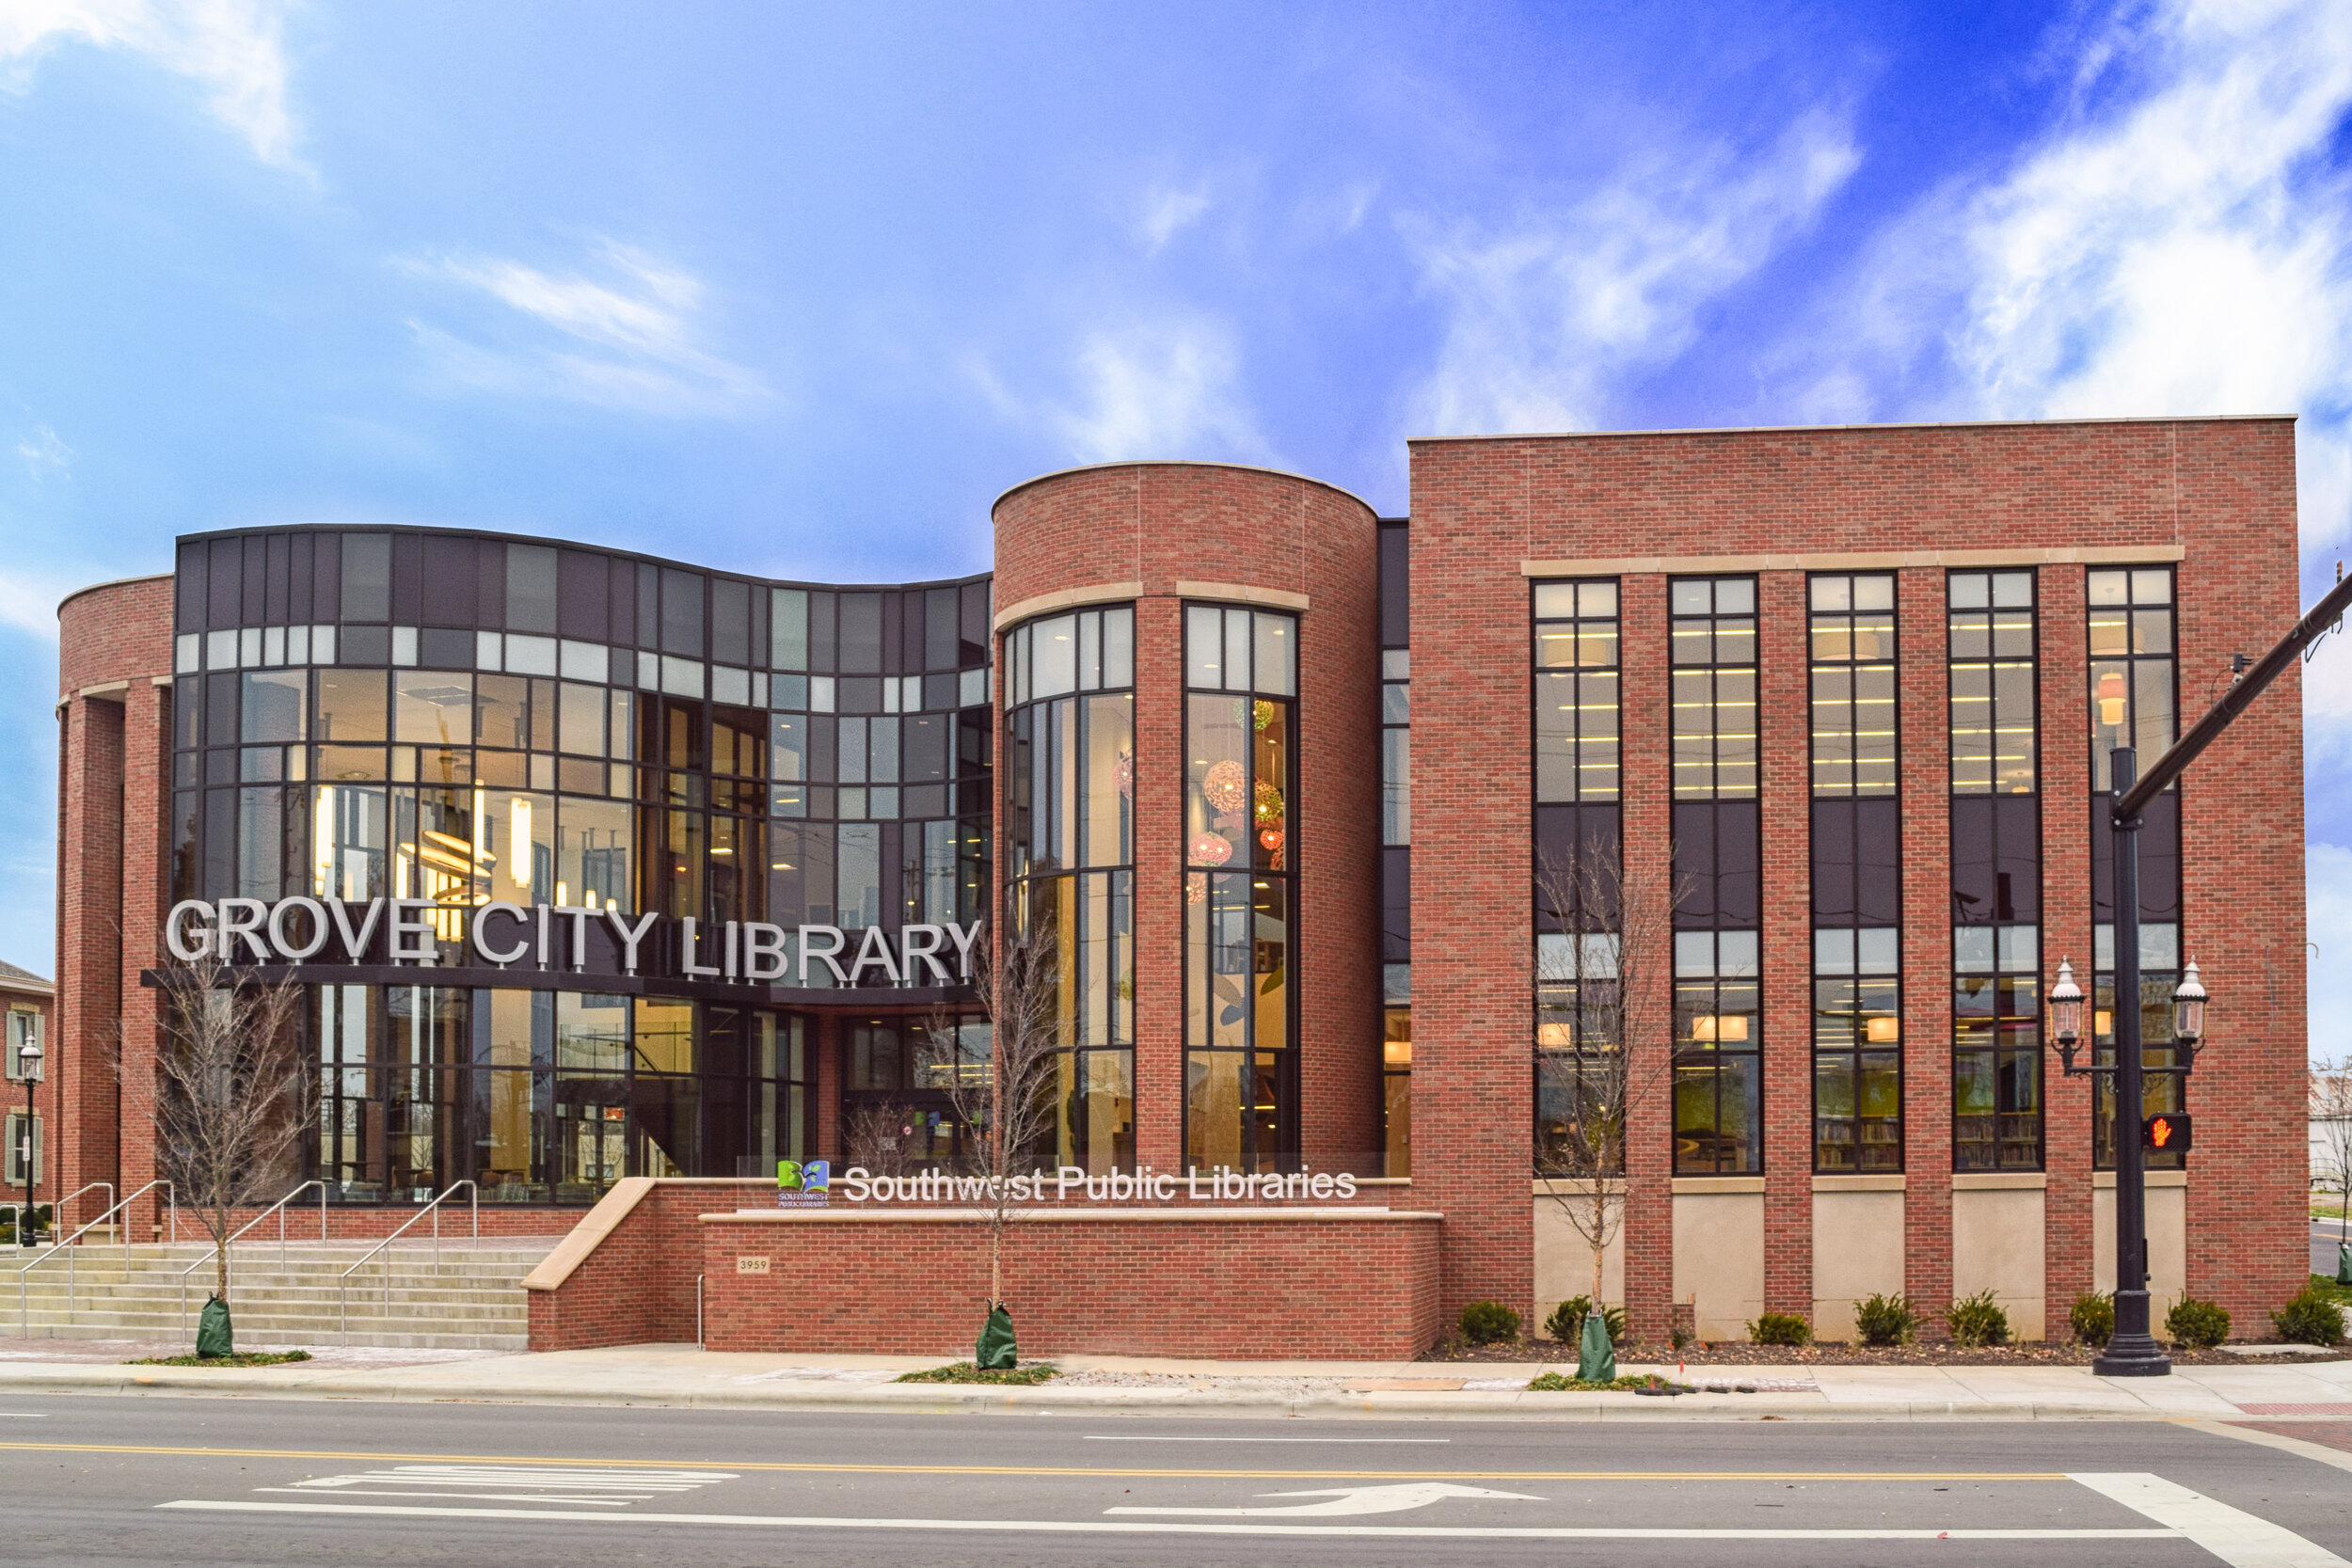 Grove City Library